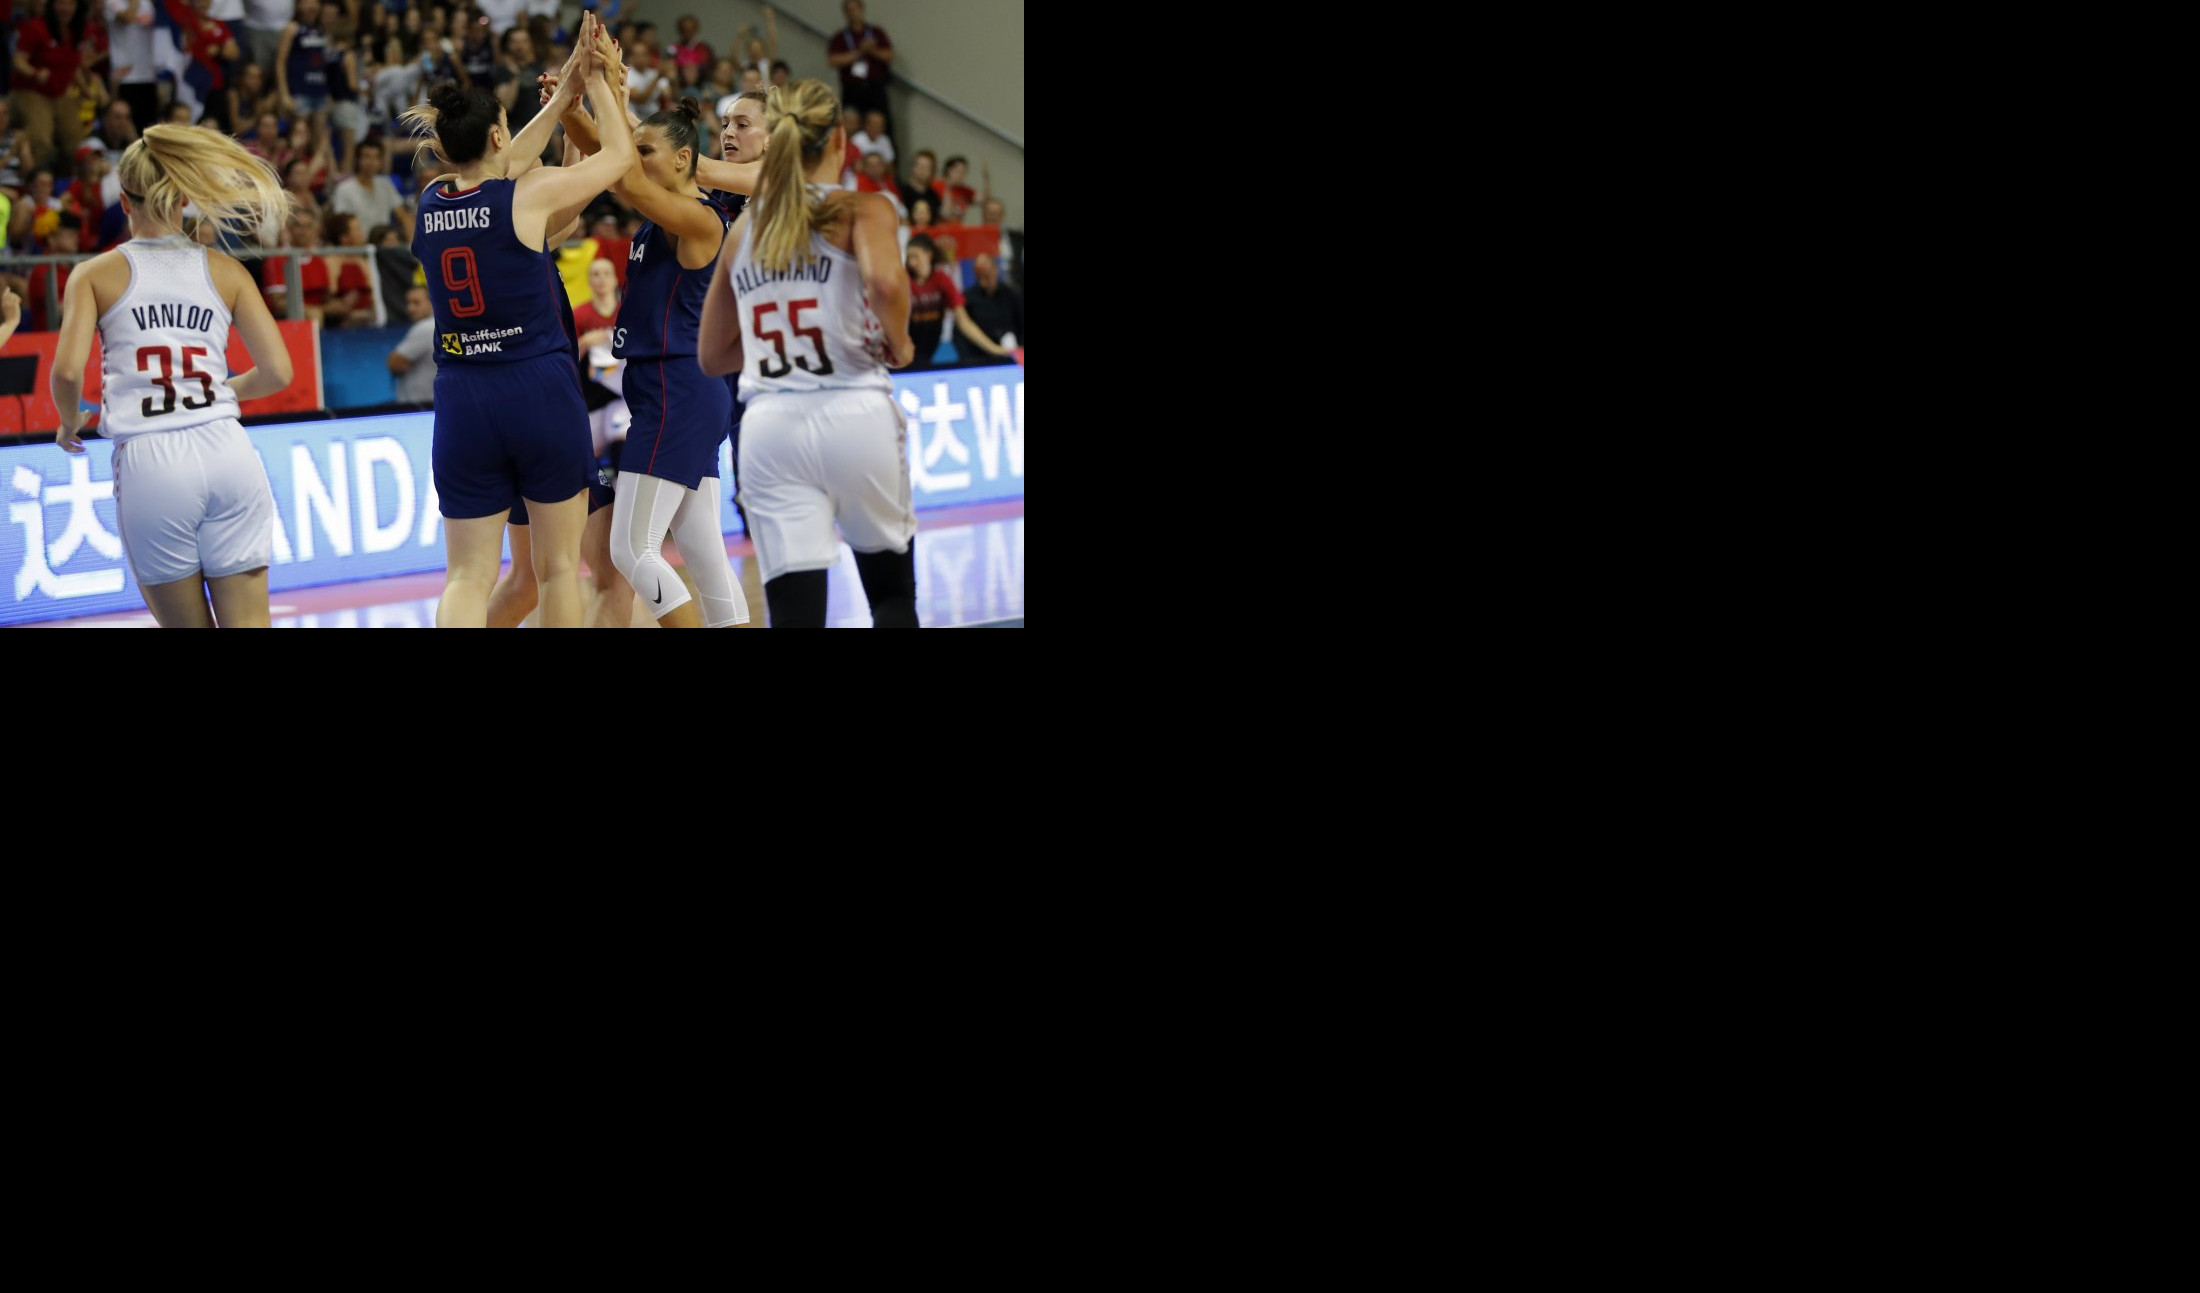 (FOTO) BRAVO DEVOJKE! Srbija slavila protiv Belgije posle drame i plasirala se u četvrtfinale Evropskog prvenstva